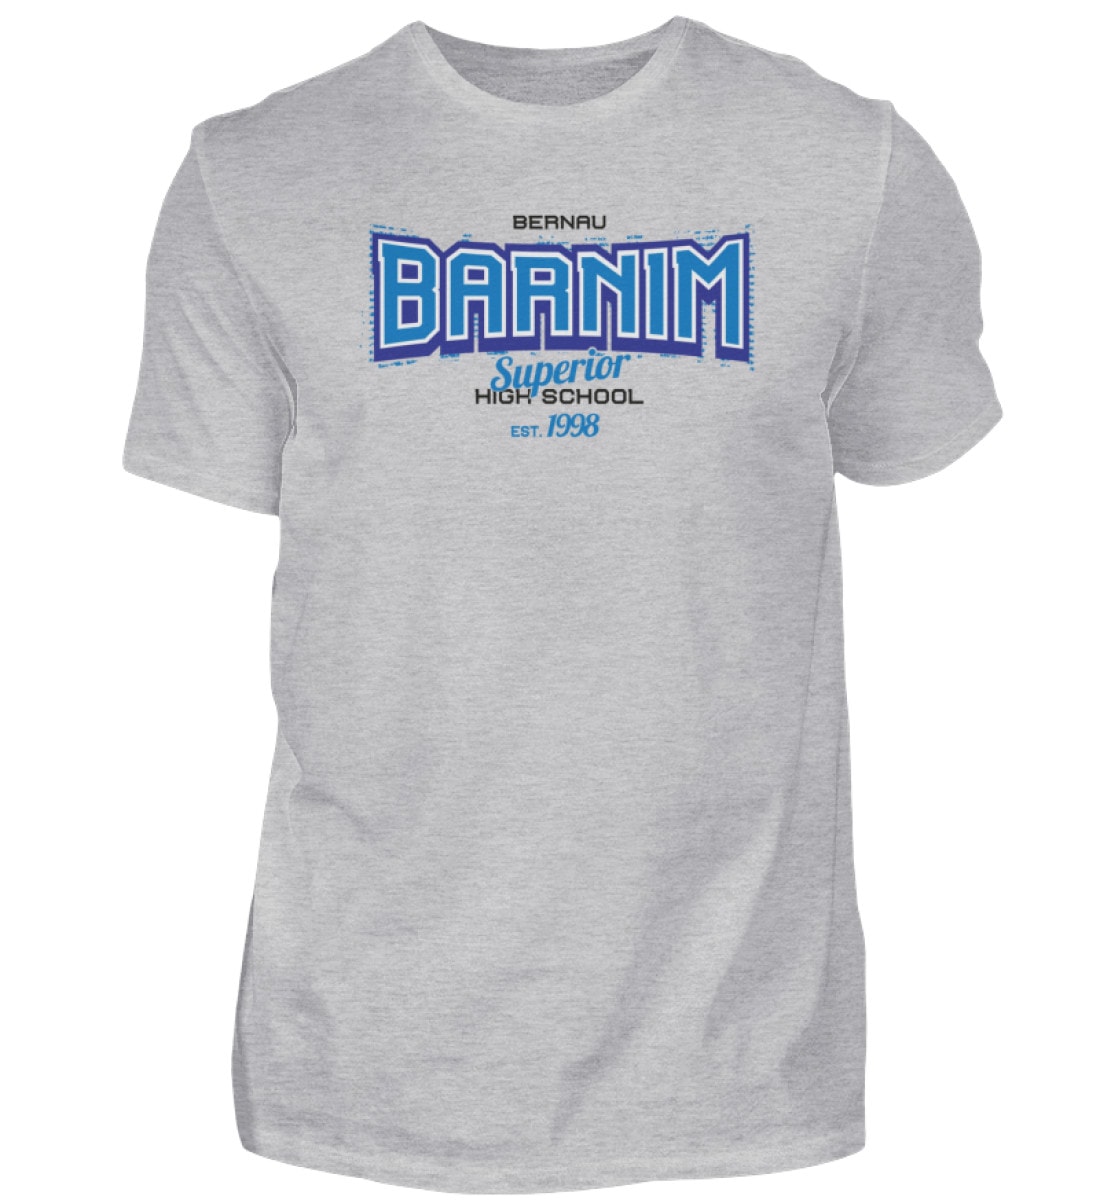 Barnim Bernau - Herren Shirt-17